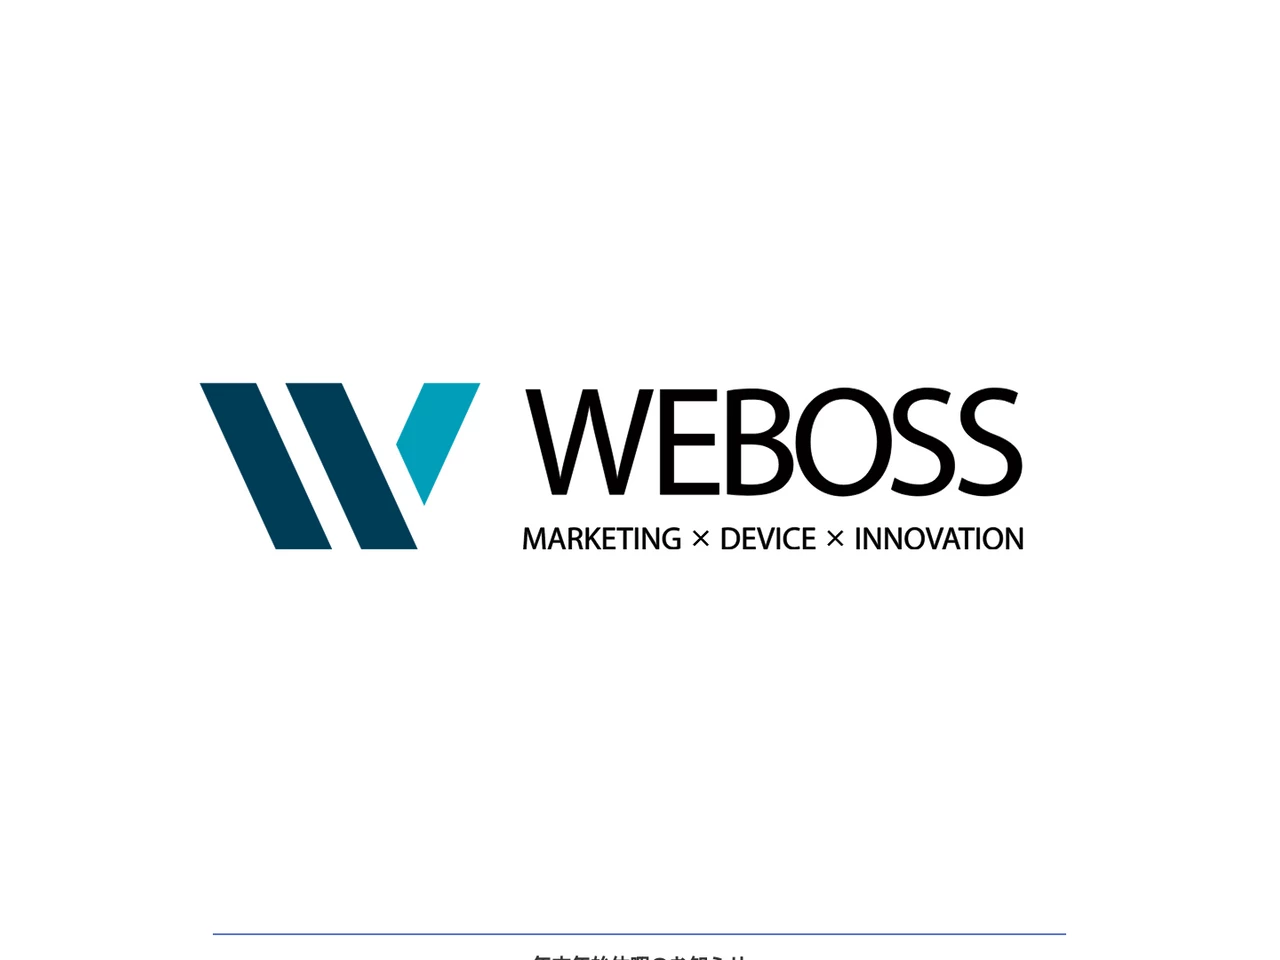 WEBOSS株式会社